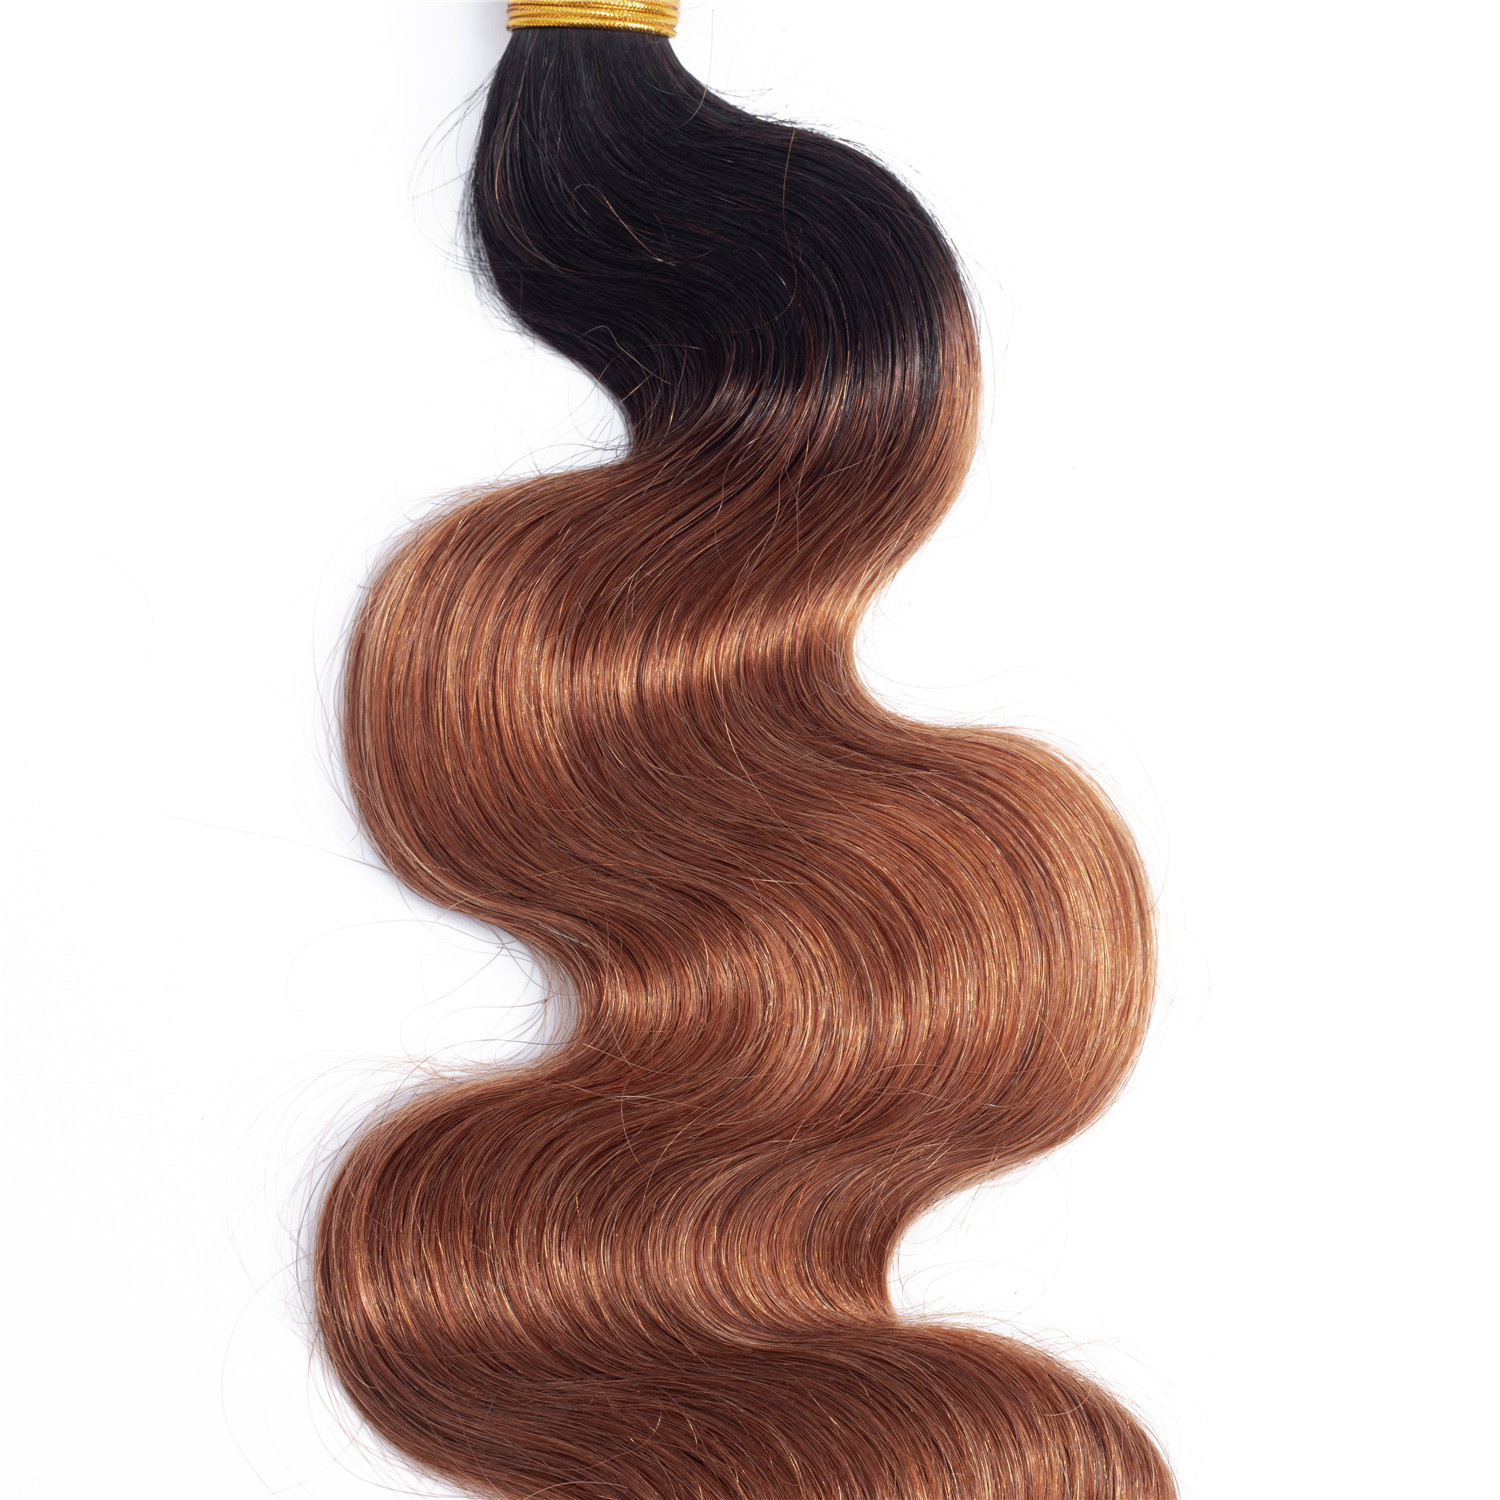 Wigsbuy Ombre Human Hair Bundles Body Wave 4 Bundles/Lot T1B/30 Color